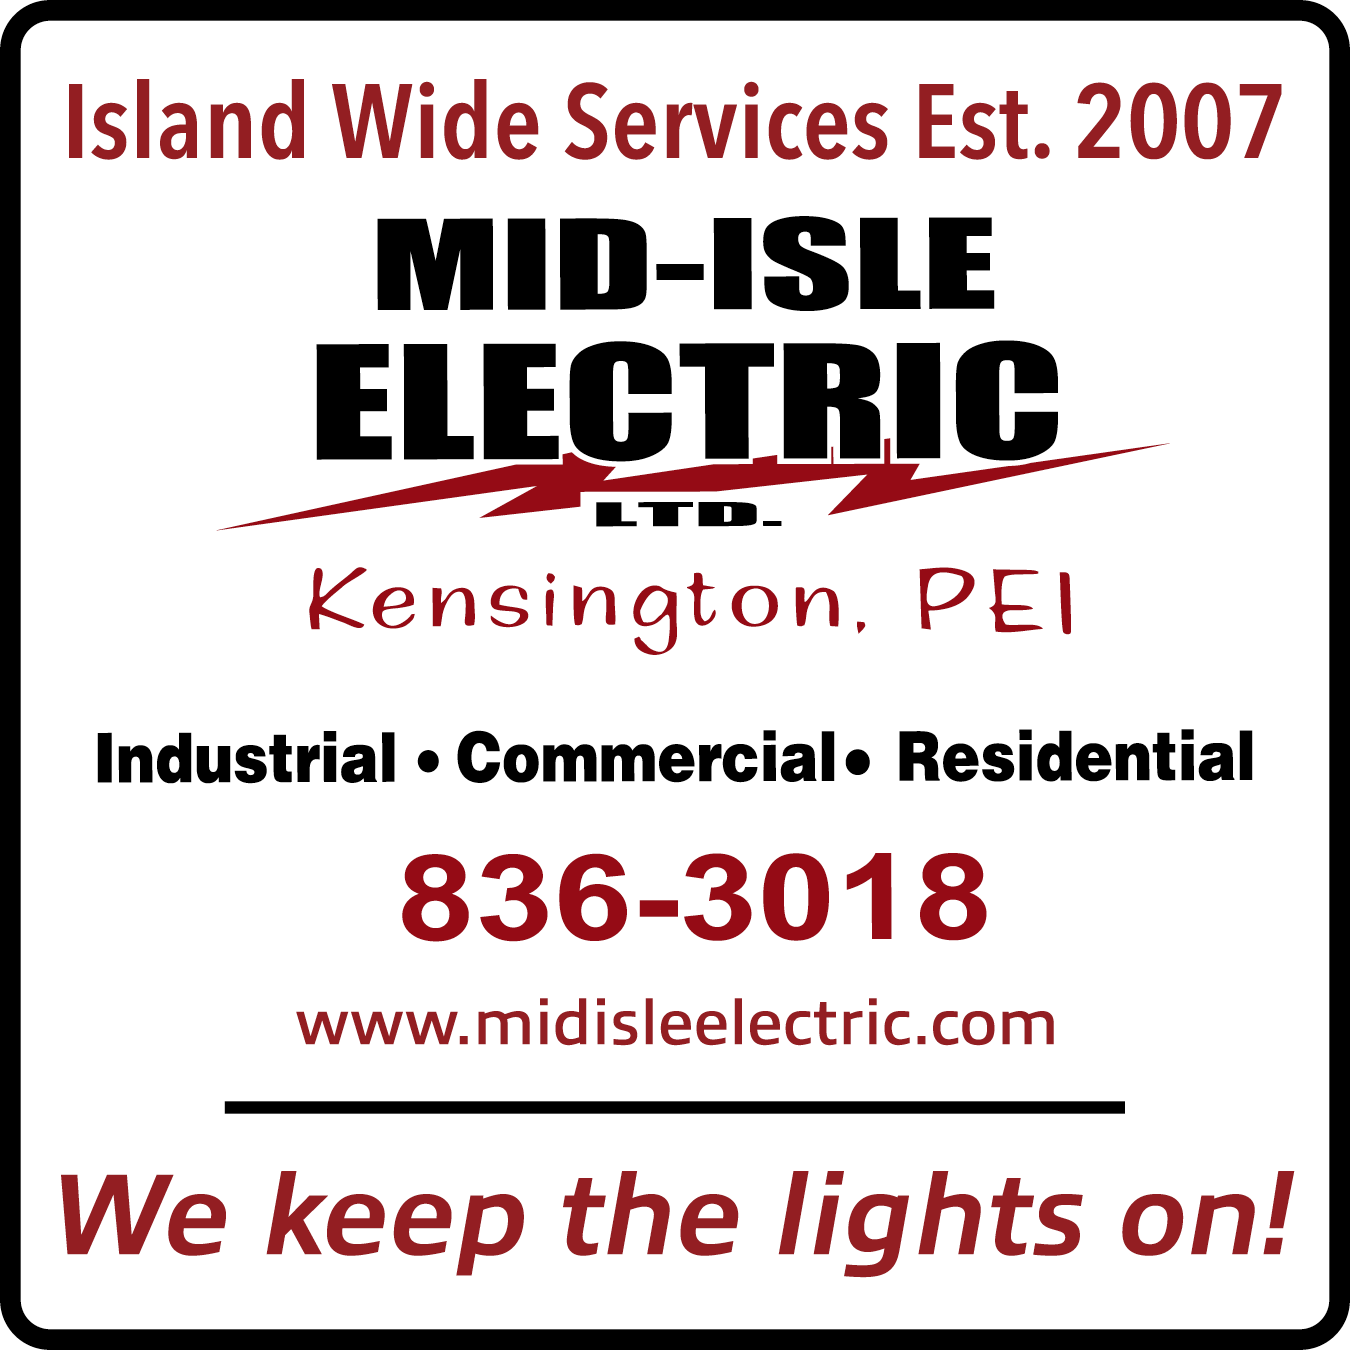 Mid-Isle Electric Ltd